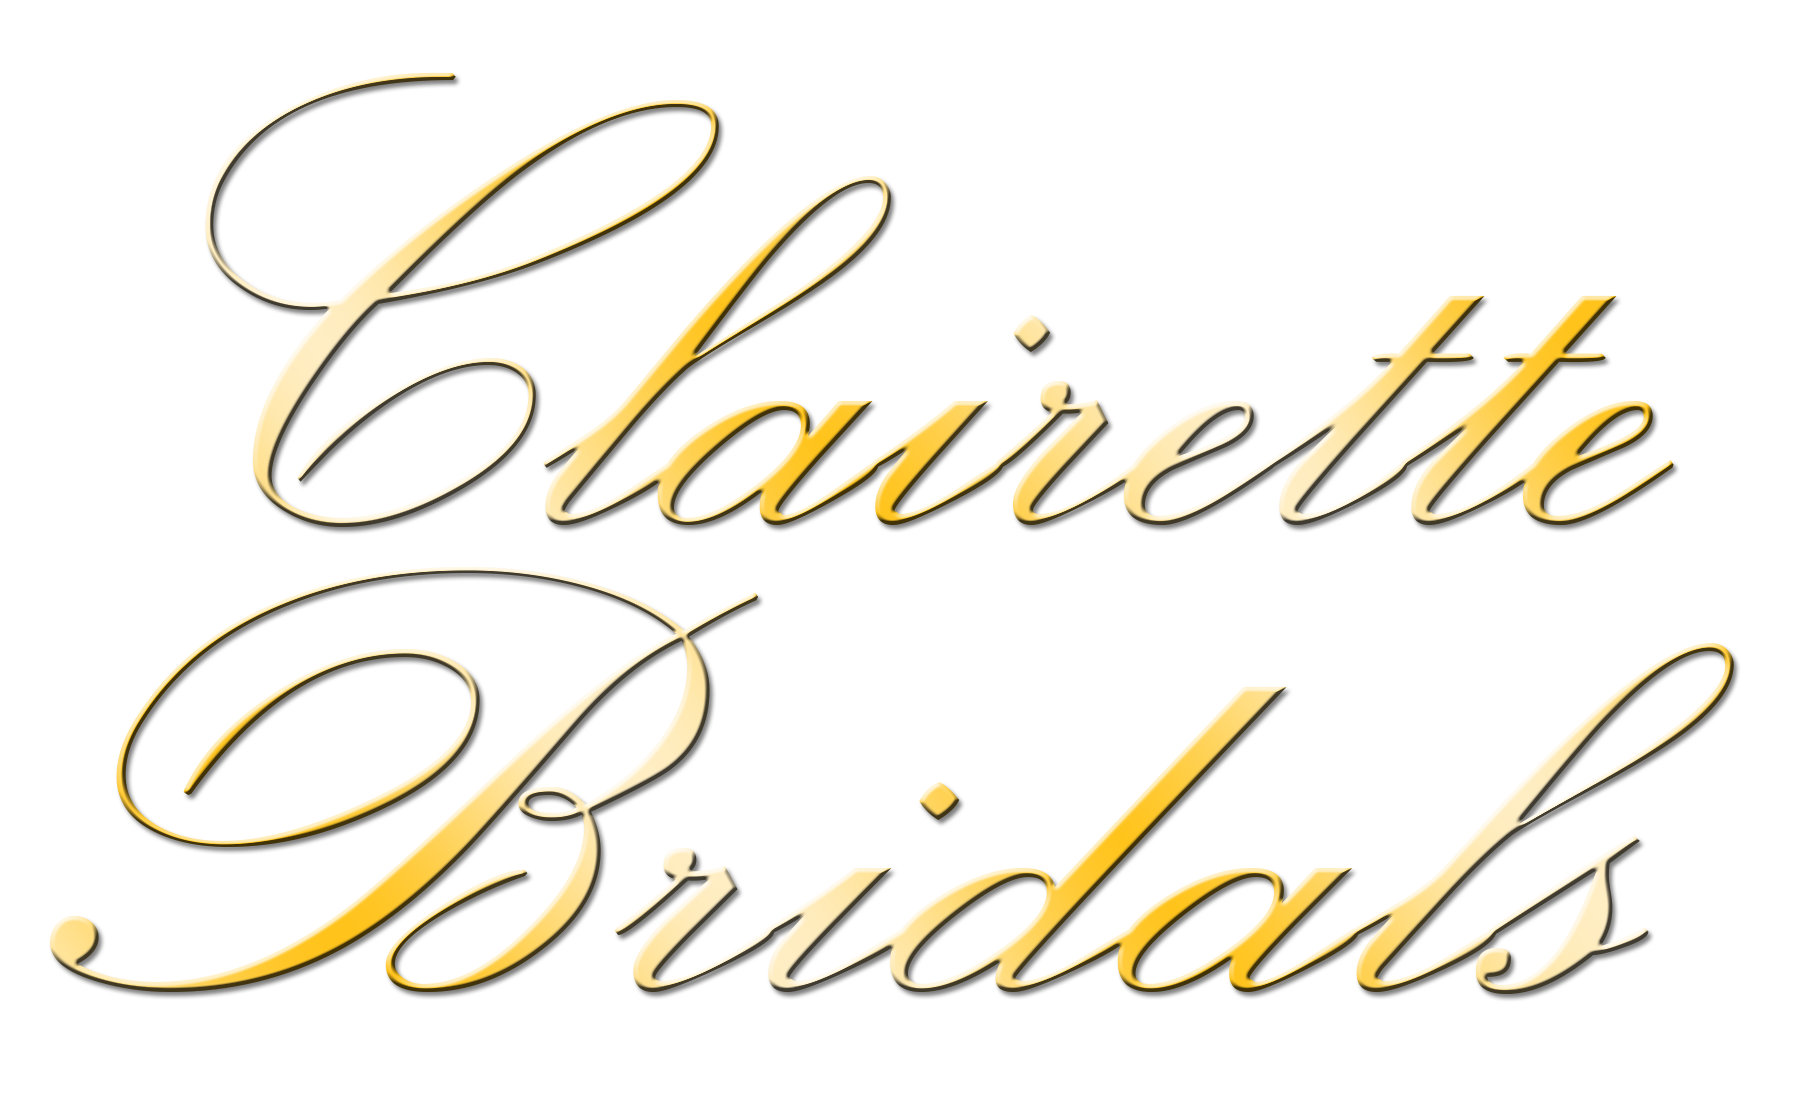 clairette bridals gold 2